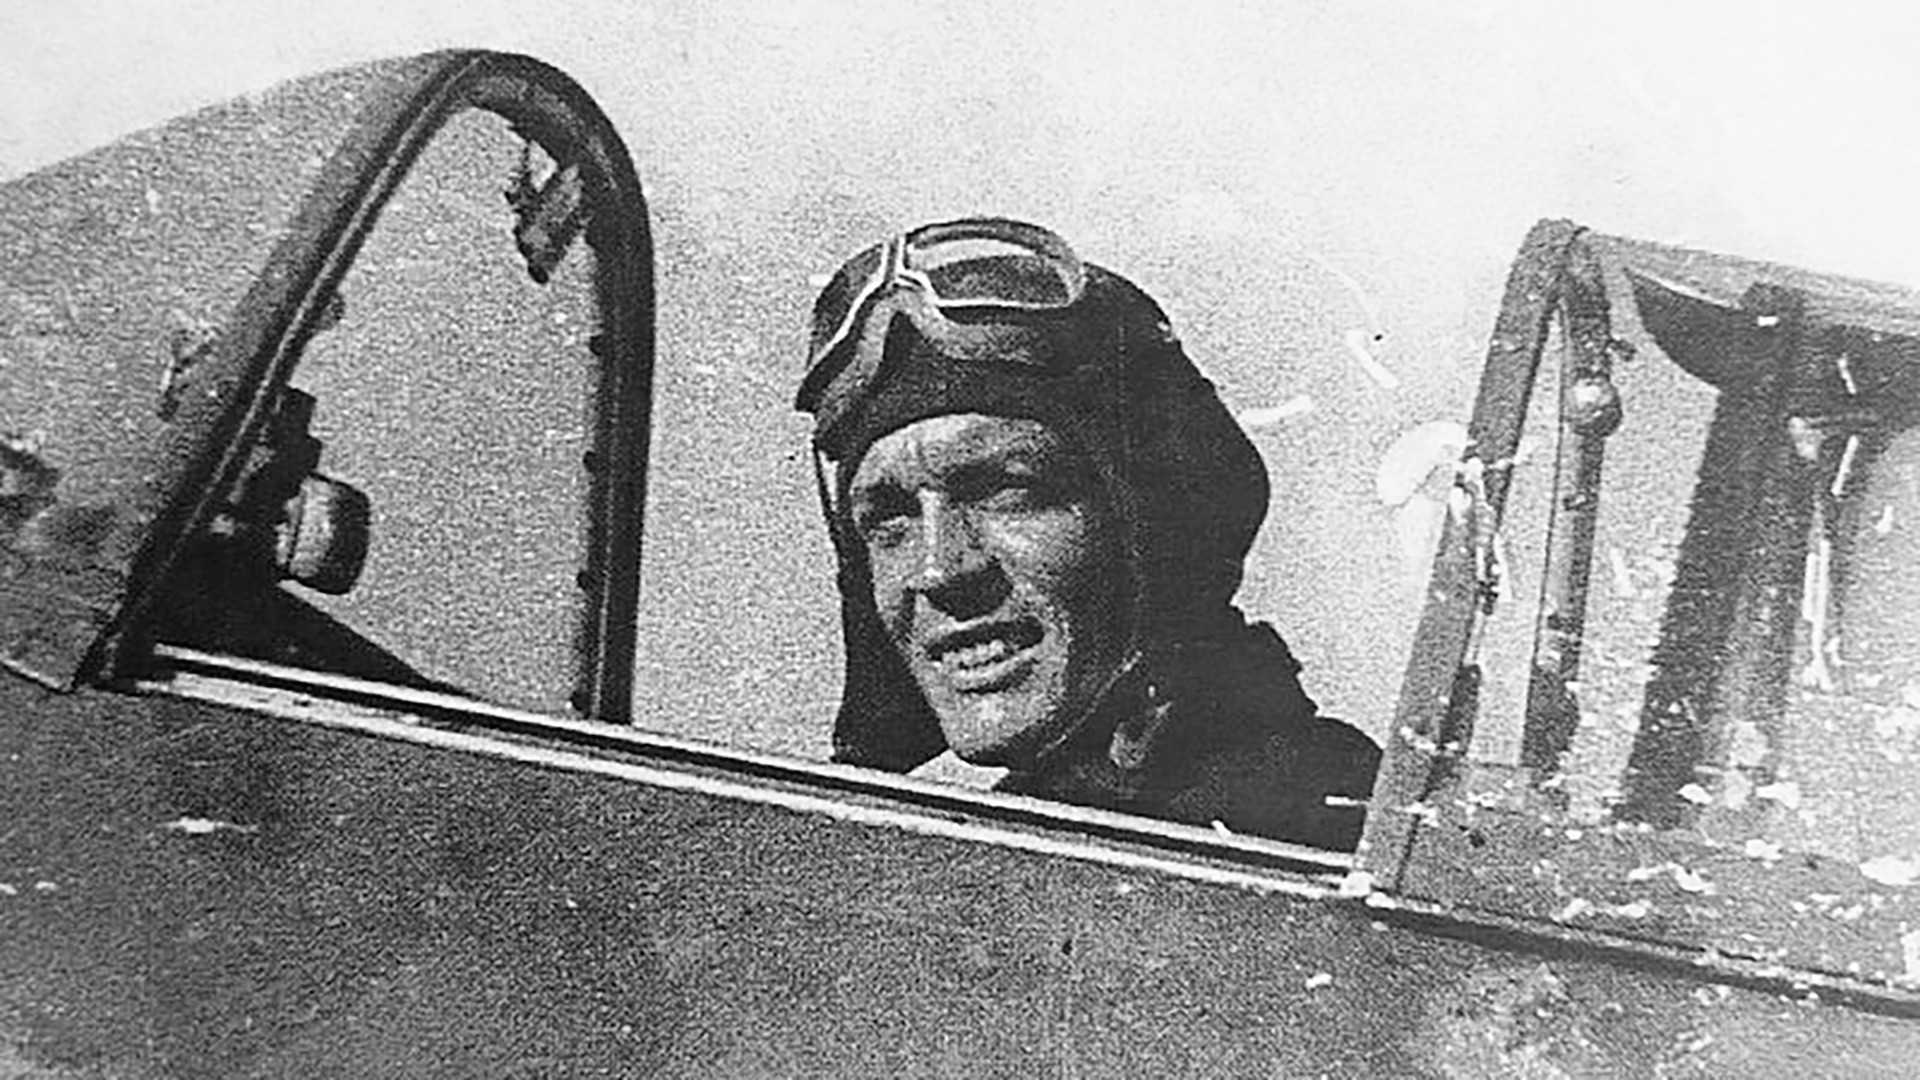 French pilot Roger Penverne in the cockpit of Yak-3 fighter